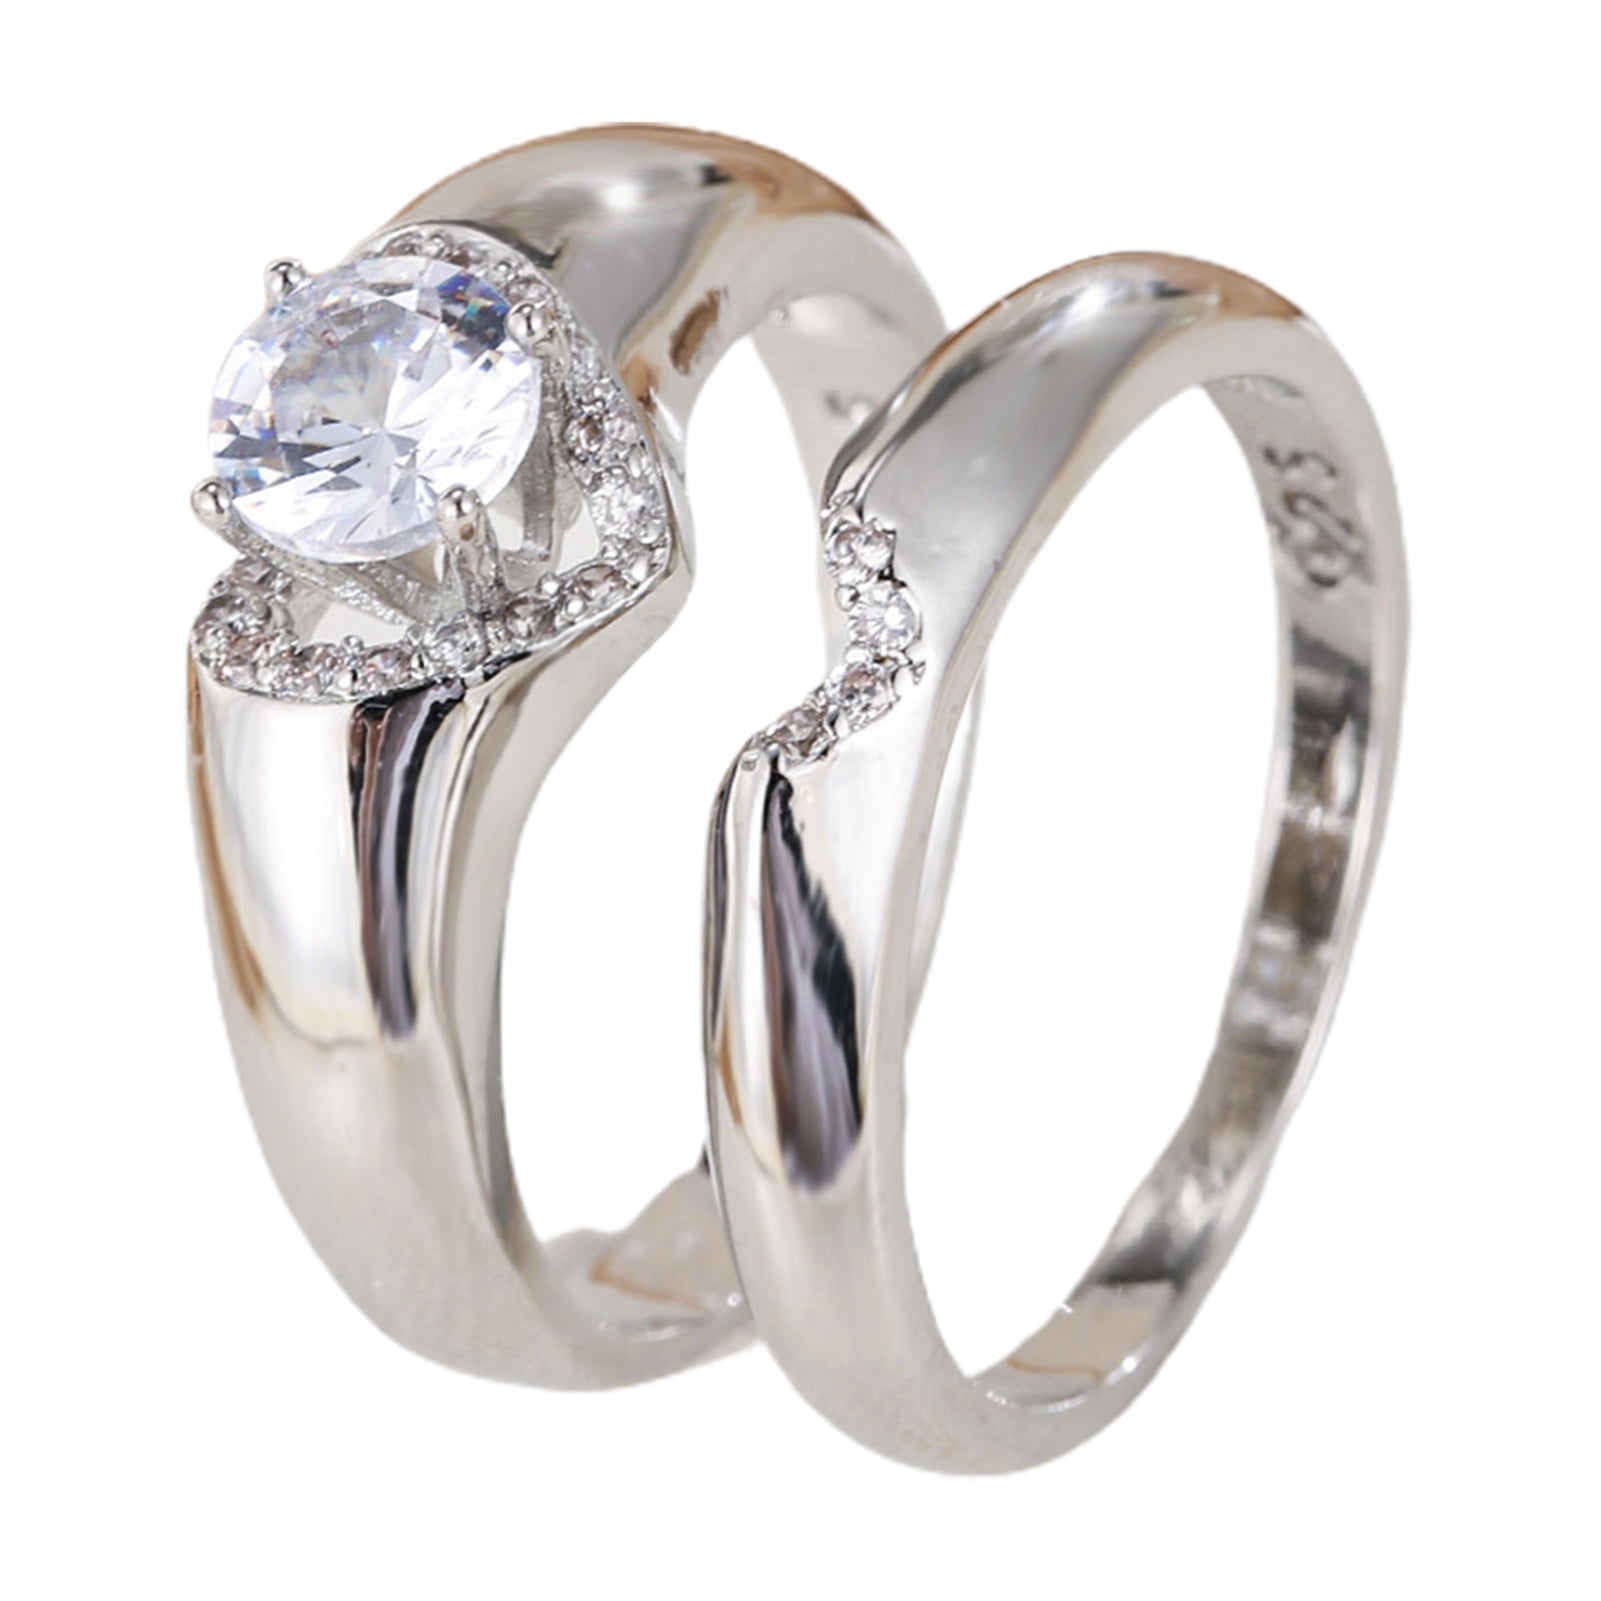 Anvazise 1 Valentine\'s Gift Women Fashion Dainty Love Finger Engagement US Ring Golden Pair Jewelry 6 Men Day Rhinestone Heart Ring Sparkling